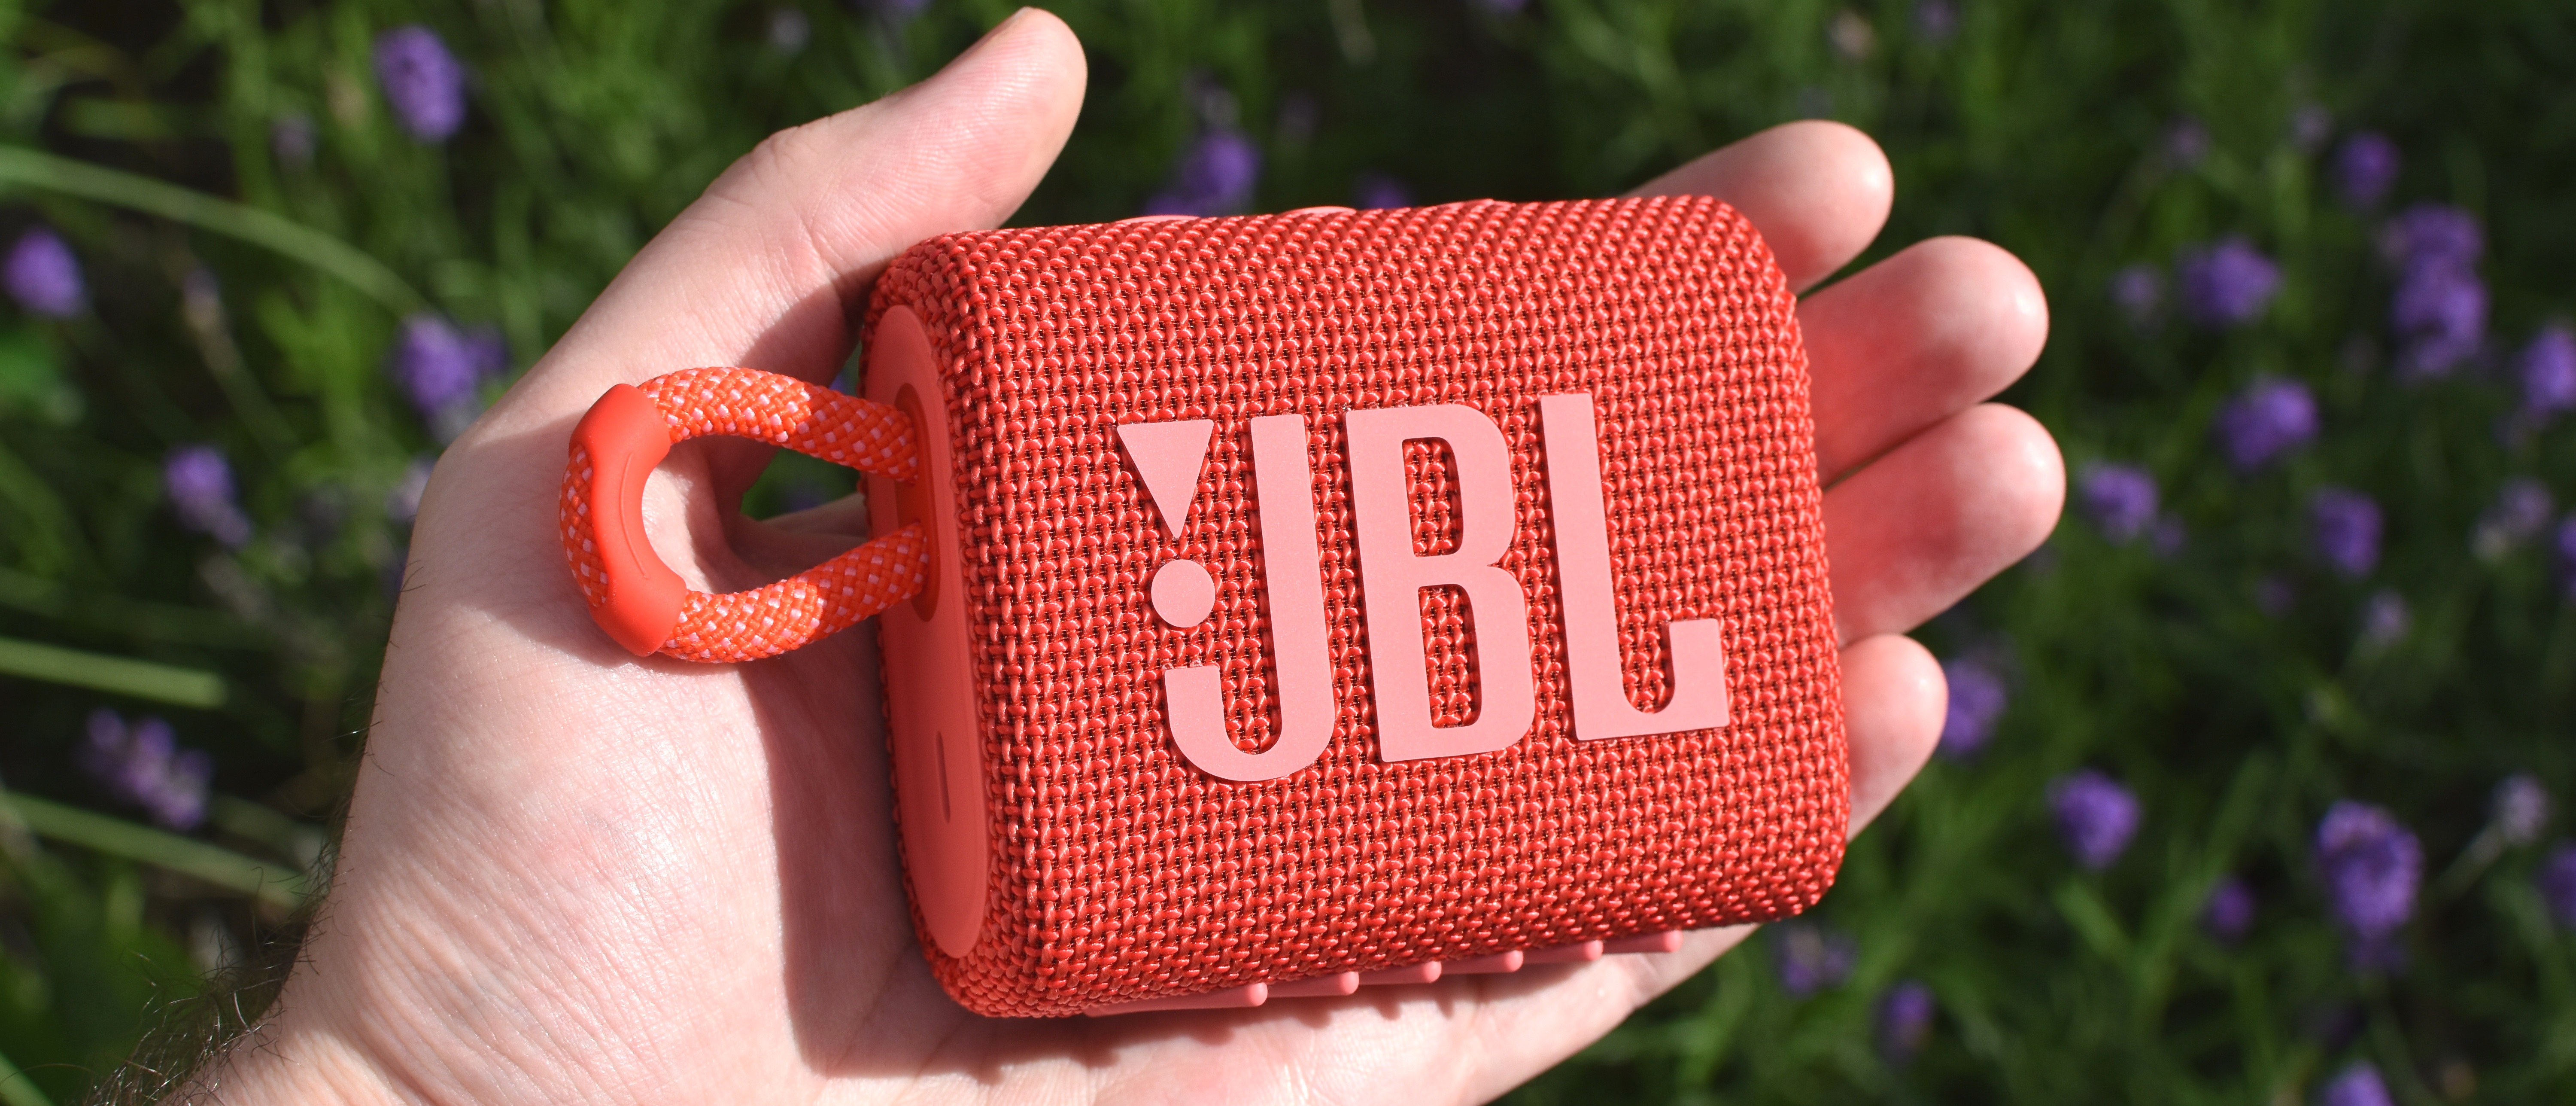 Christmas in progress designer JBL Go 3 review: A punchy, pocket-sized waterproof speaker | Tom's Guide